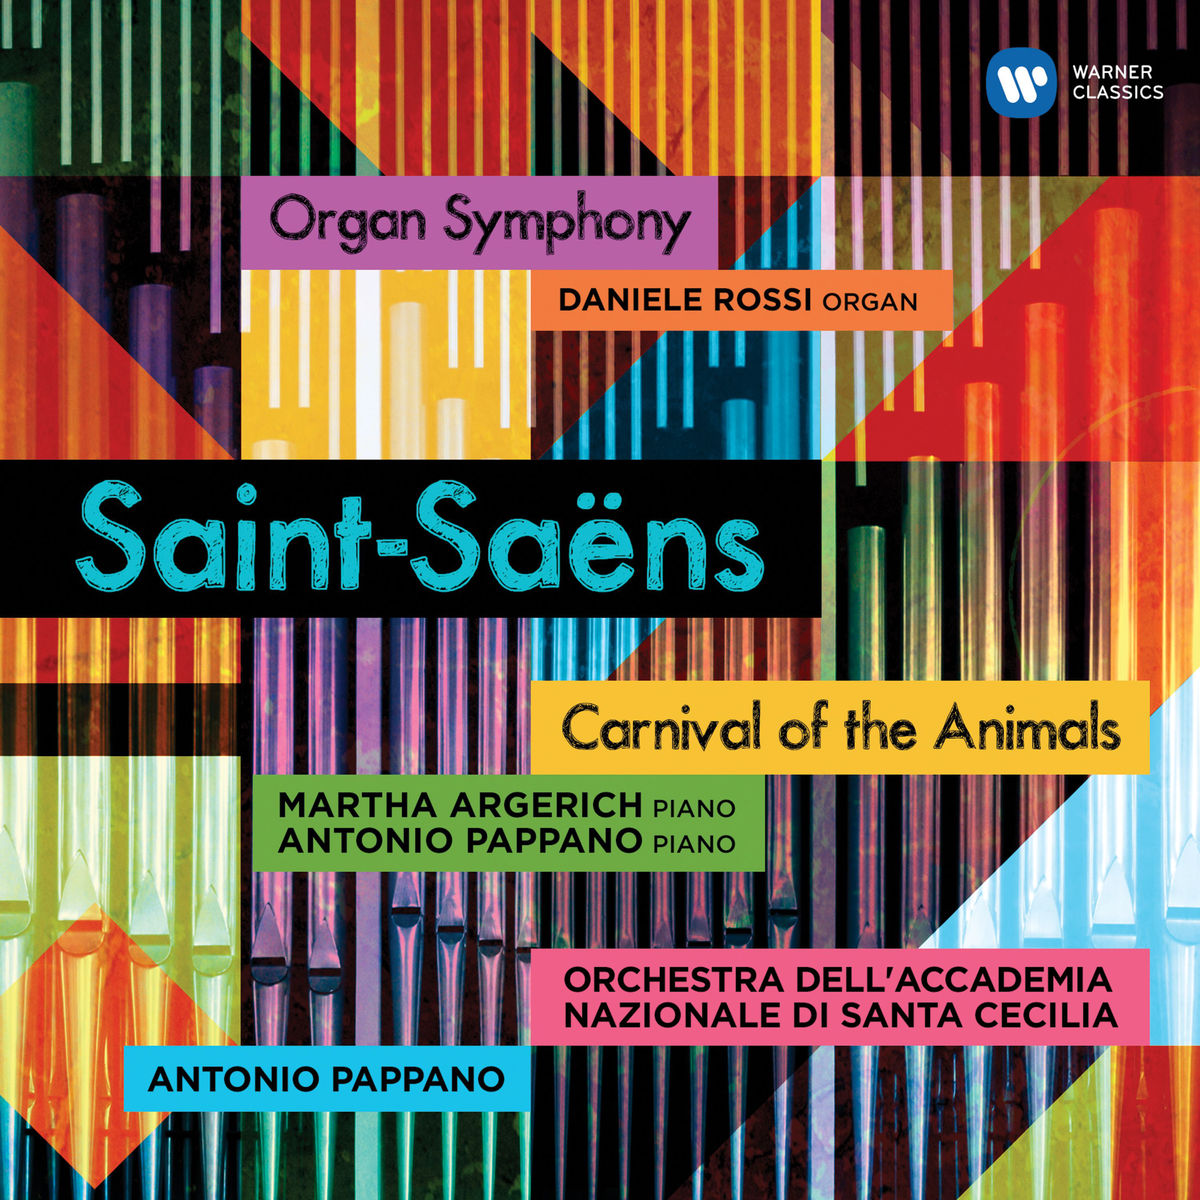 Antonio Pappano - Saint-Saens: Carnival of the Animals & Symphony No. 3, "Organ Symphony" (2017) [Qobuz FLAC 24bit/44,1kHz]